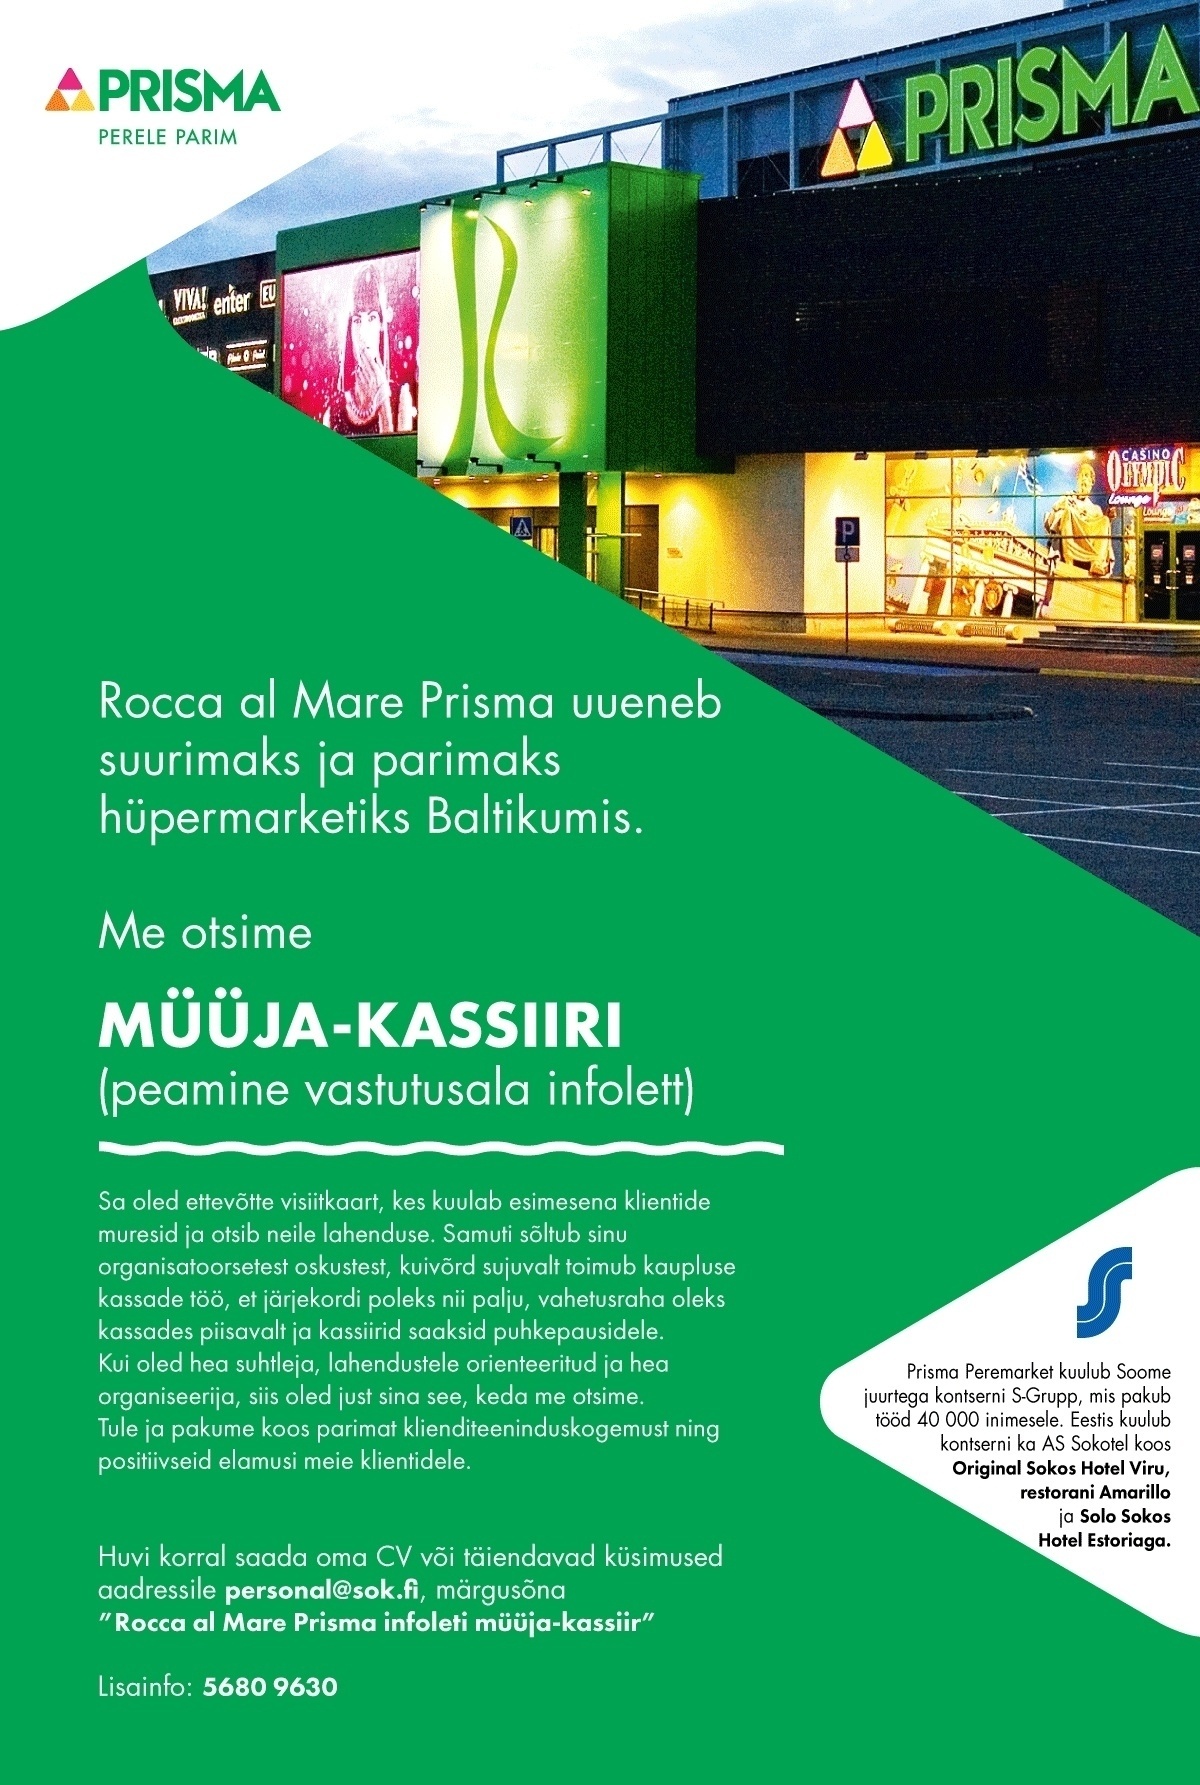 Prisma Peremarket AS Müüja-kassiir infoletti Rocca al Mare Prismas